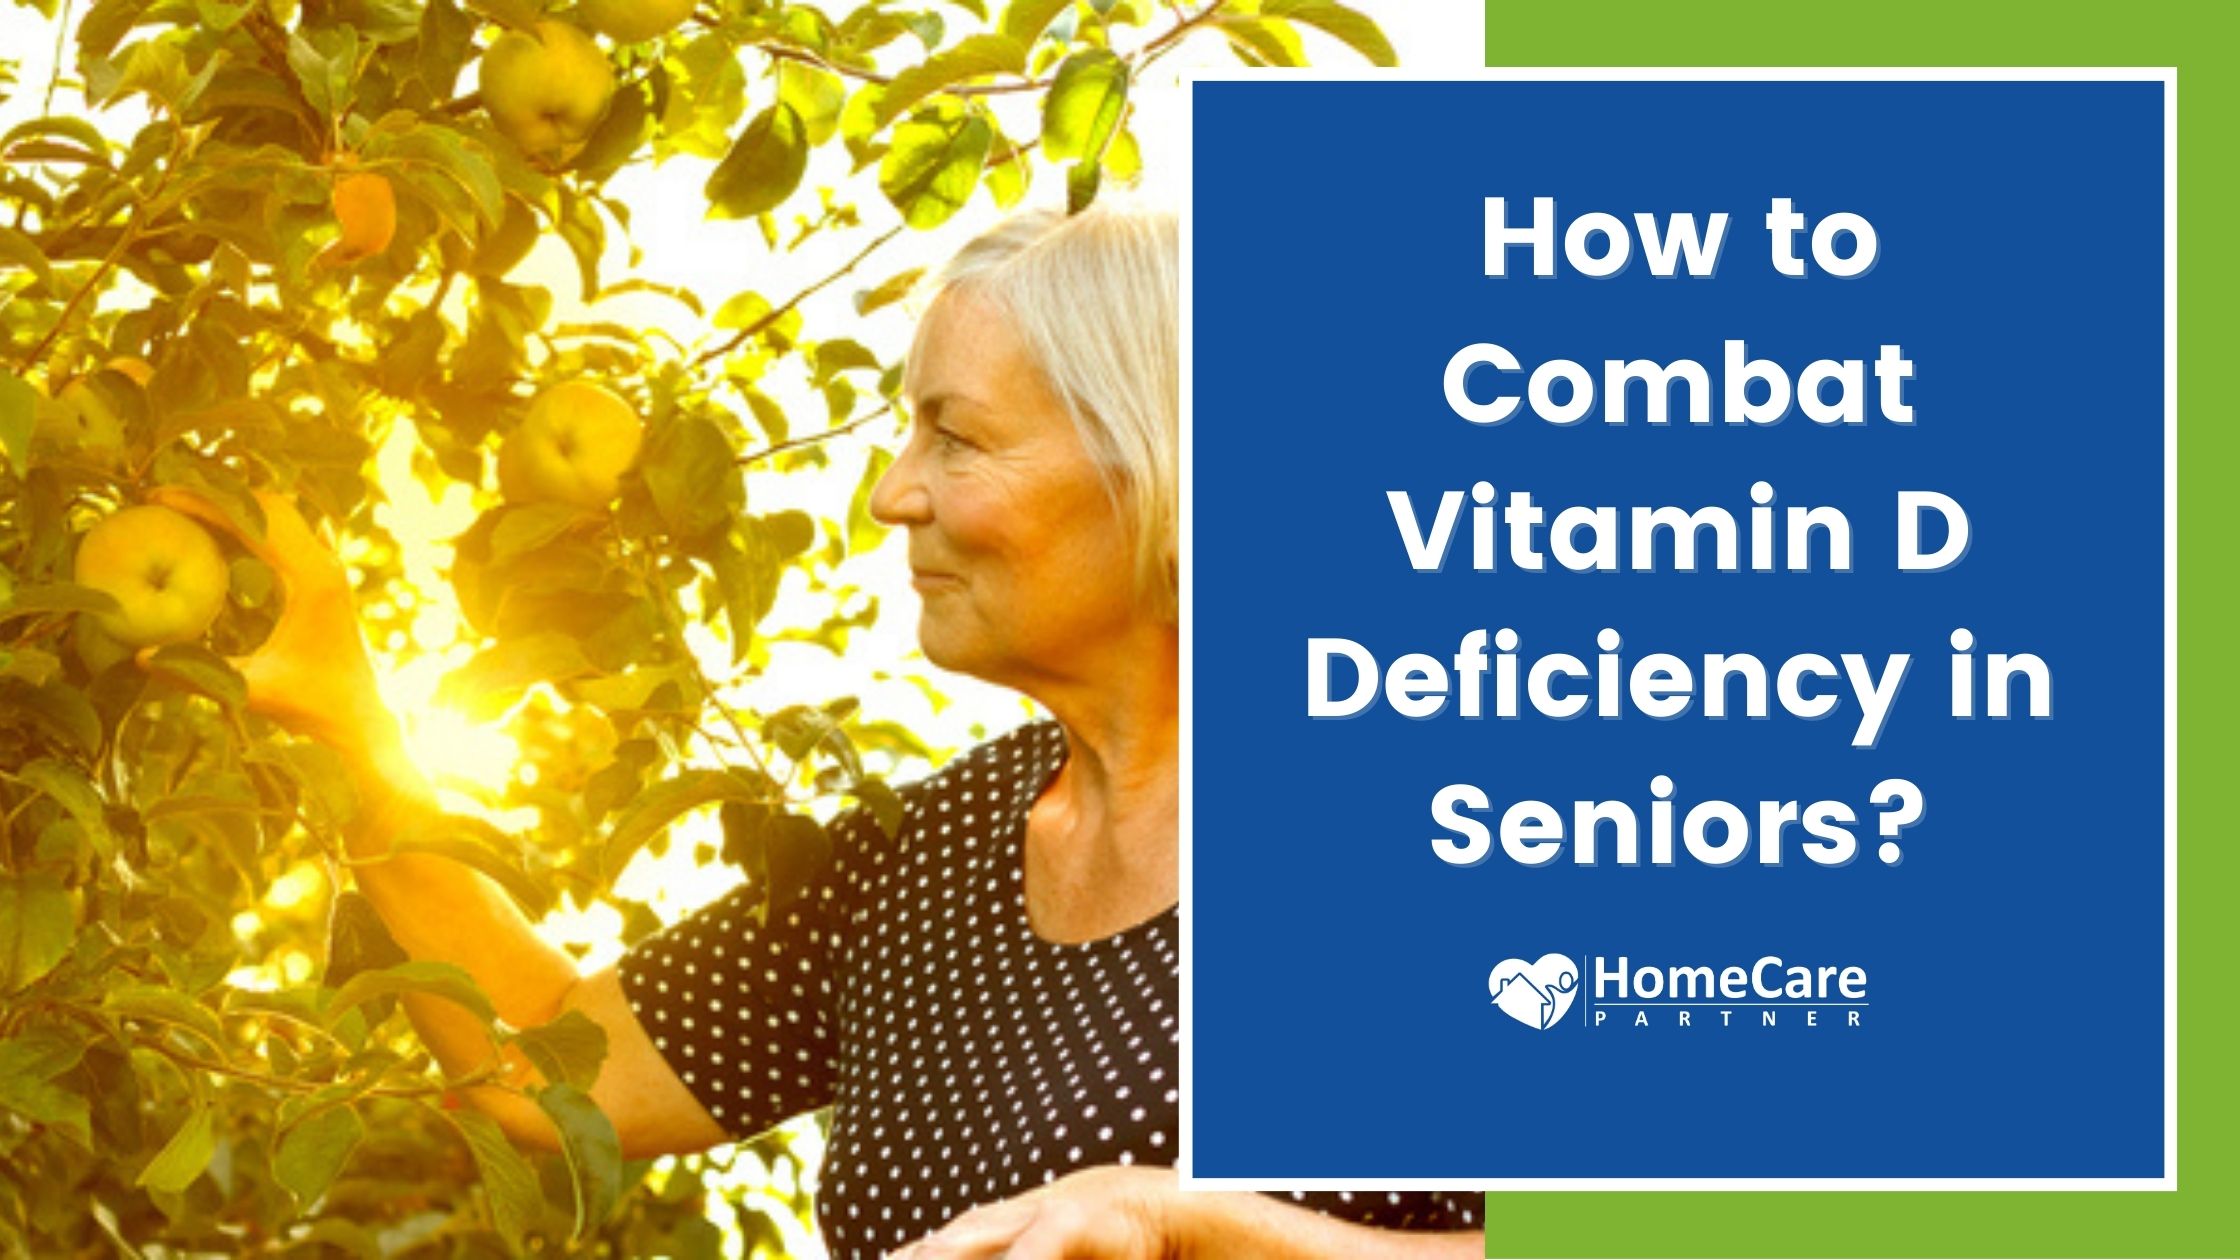 How to Combat Vitamin D Deficiency in Seniors?